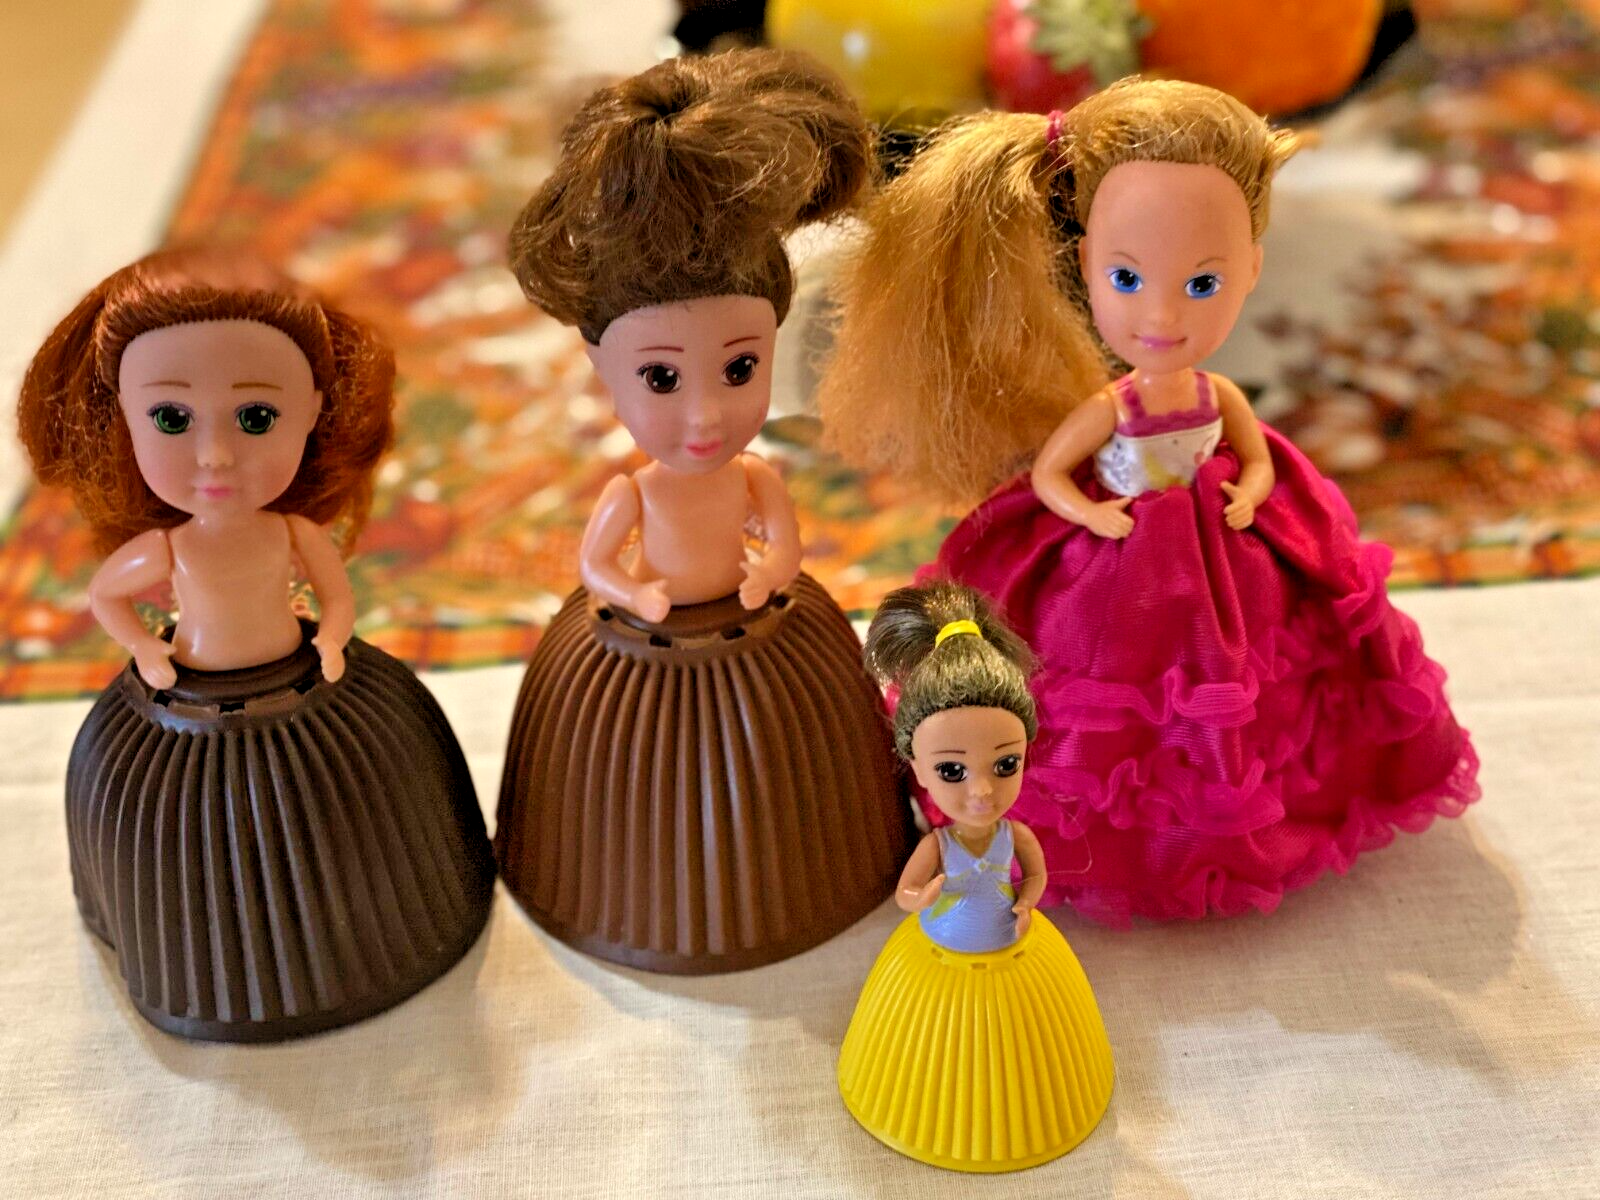 Tonka Haschel Toys Emco Lot of 4 Different Cupcake Dolls - $15.83